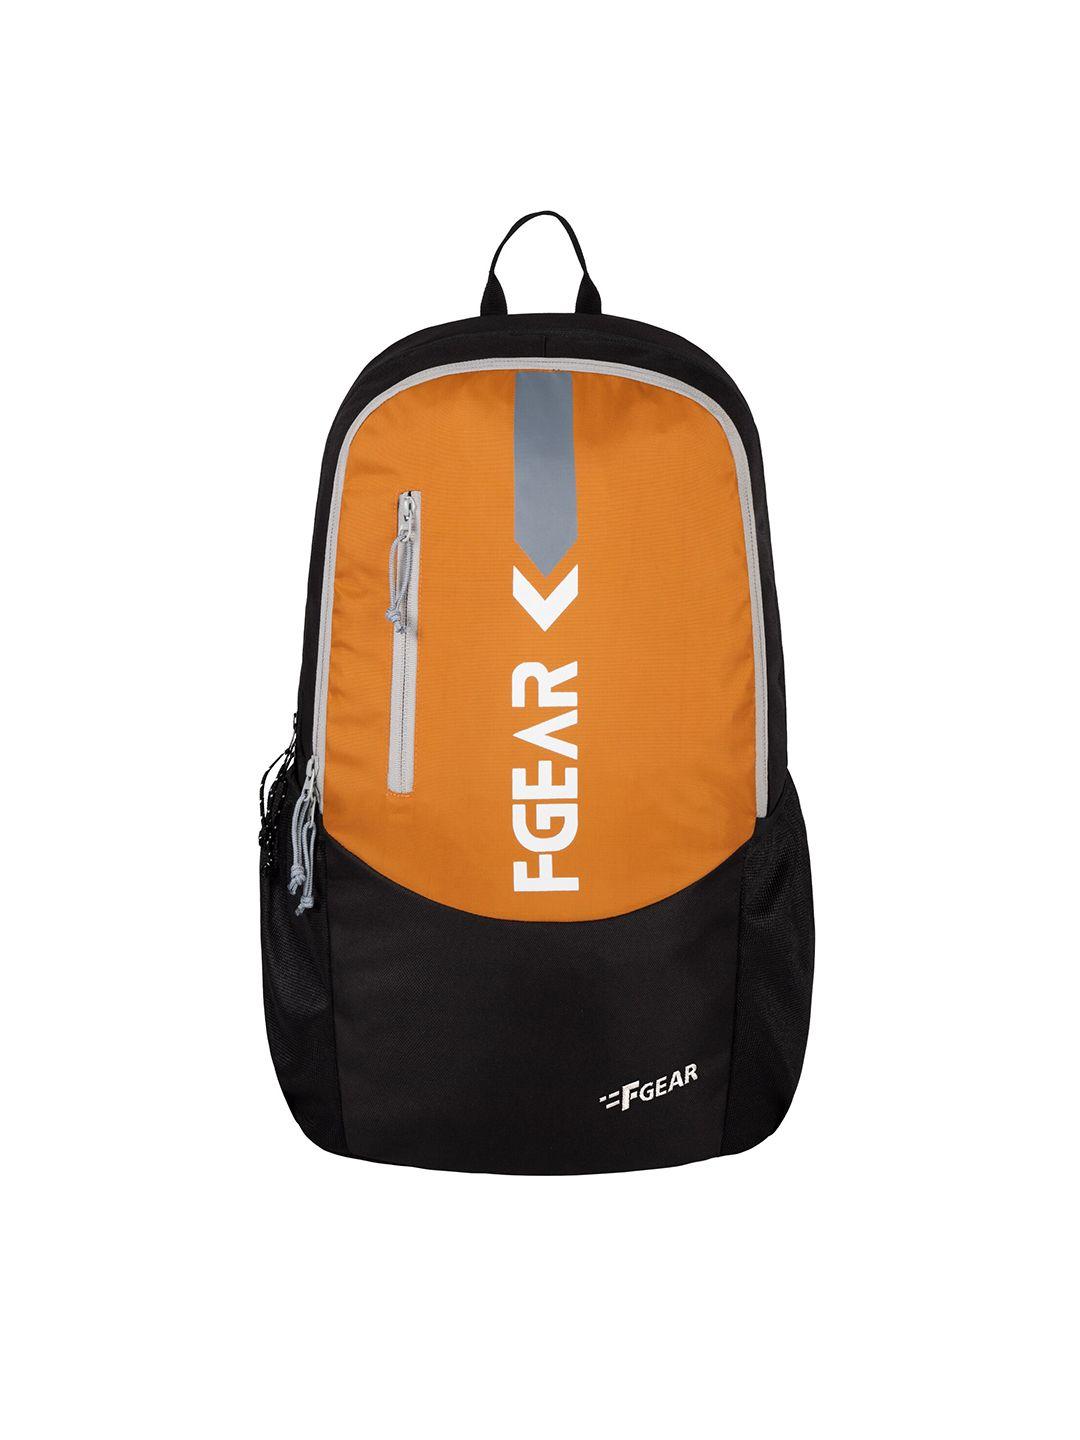 f gear unisex gold-toned & black brand logo contrast detail backpack